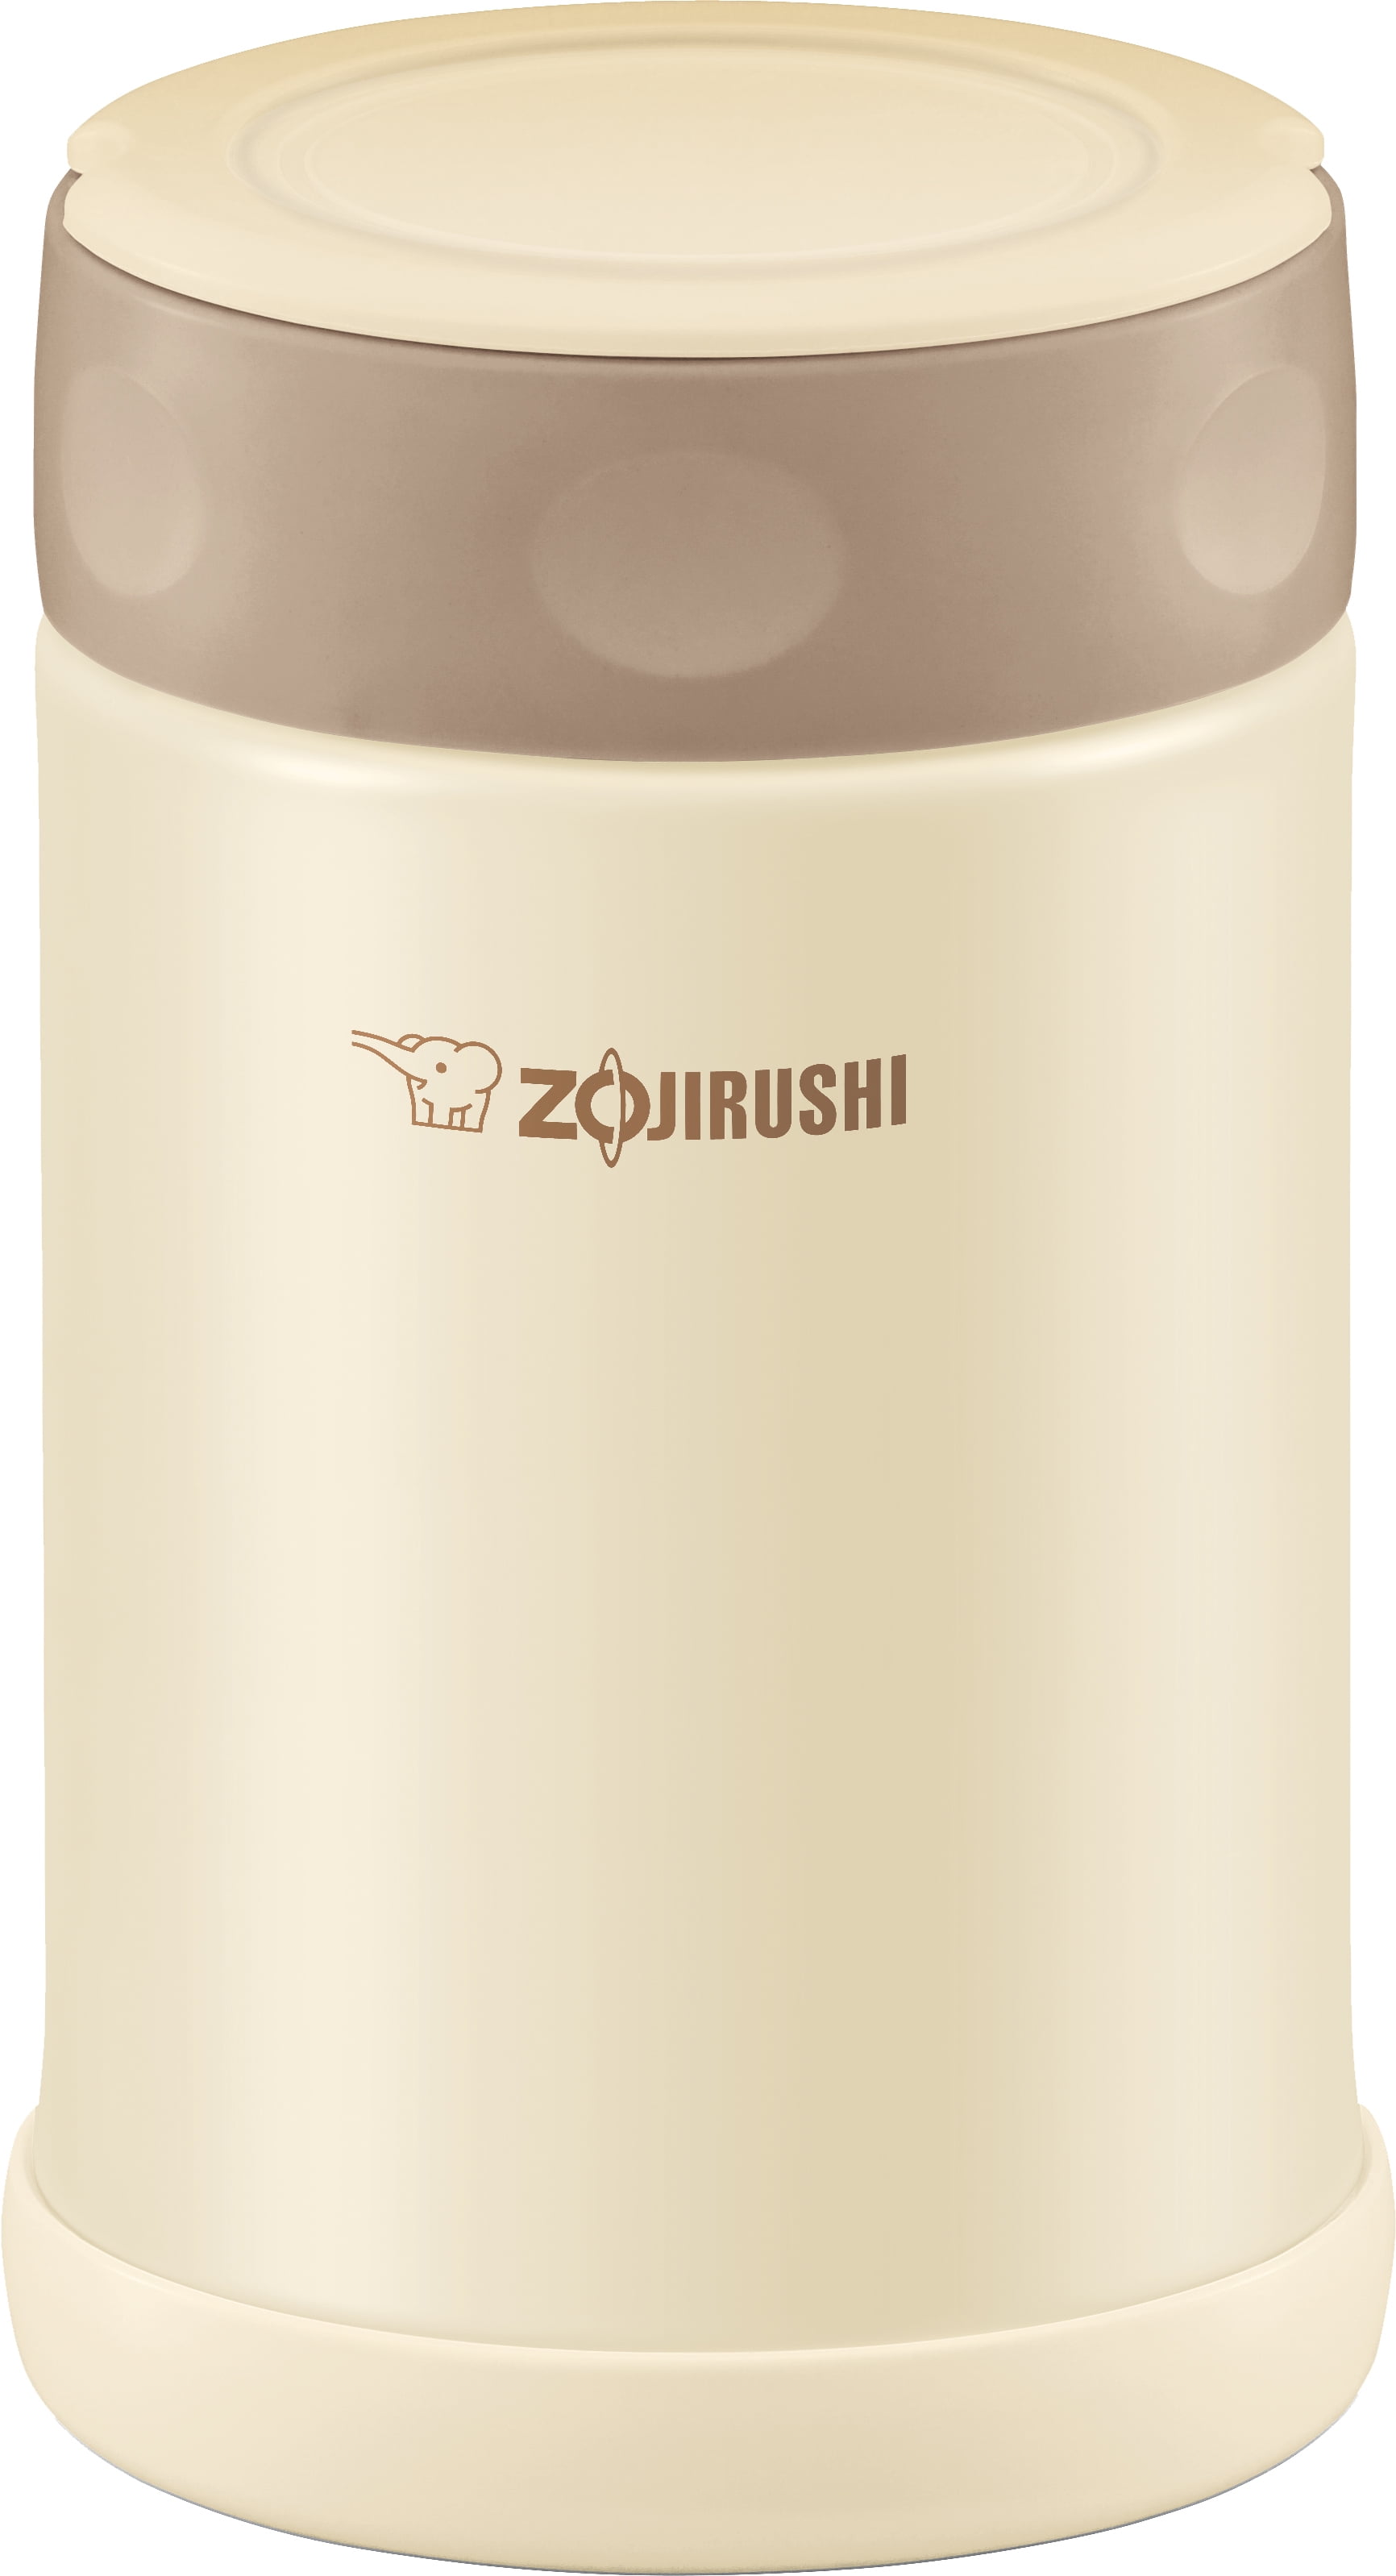 Zojirushi Stainless Steel Food Jar, 17-Ounce/0.5-Liter, Aqua Blue